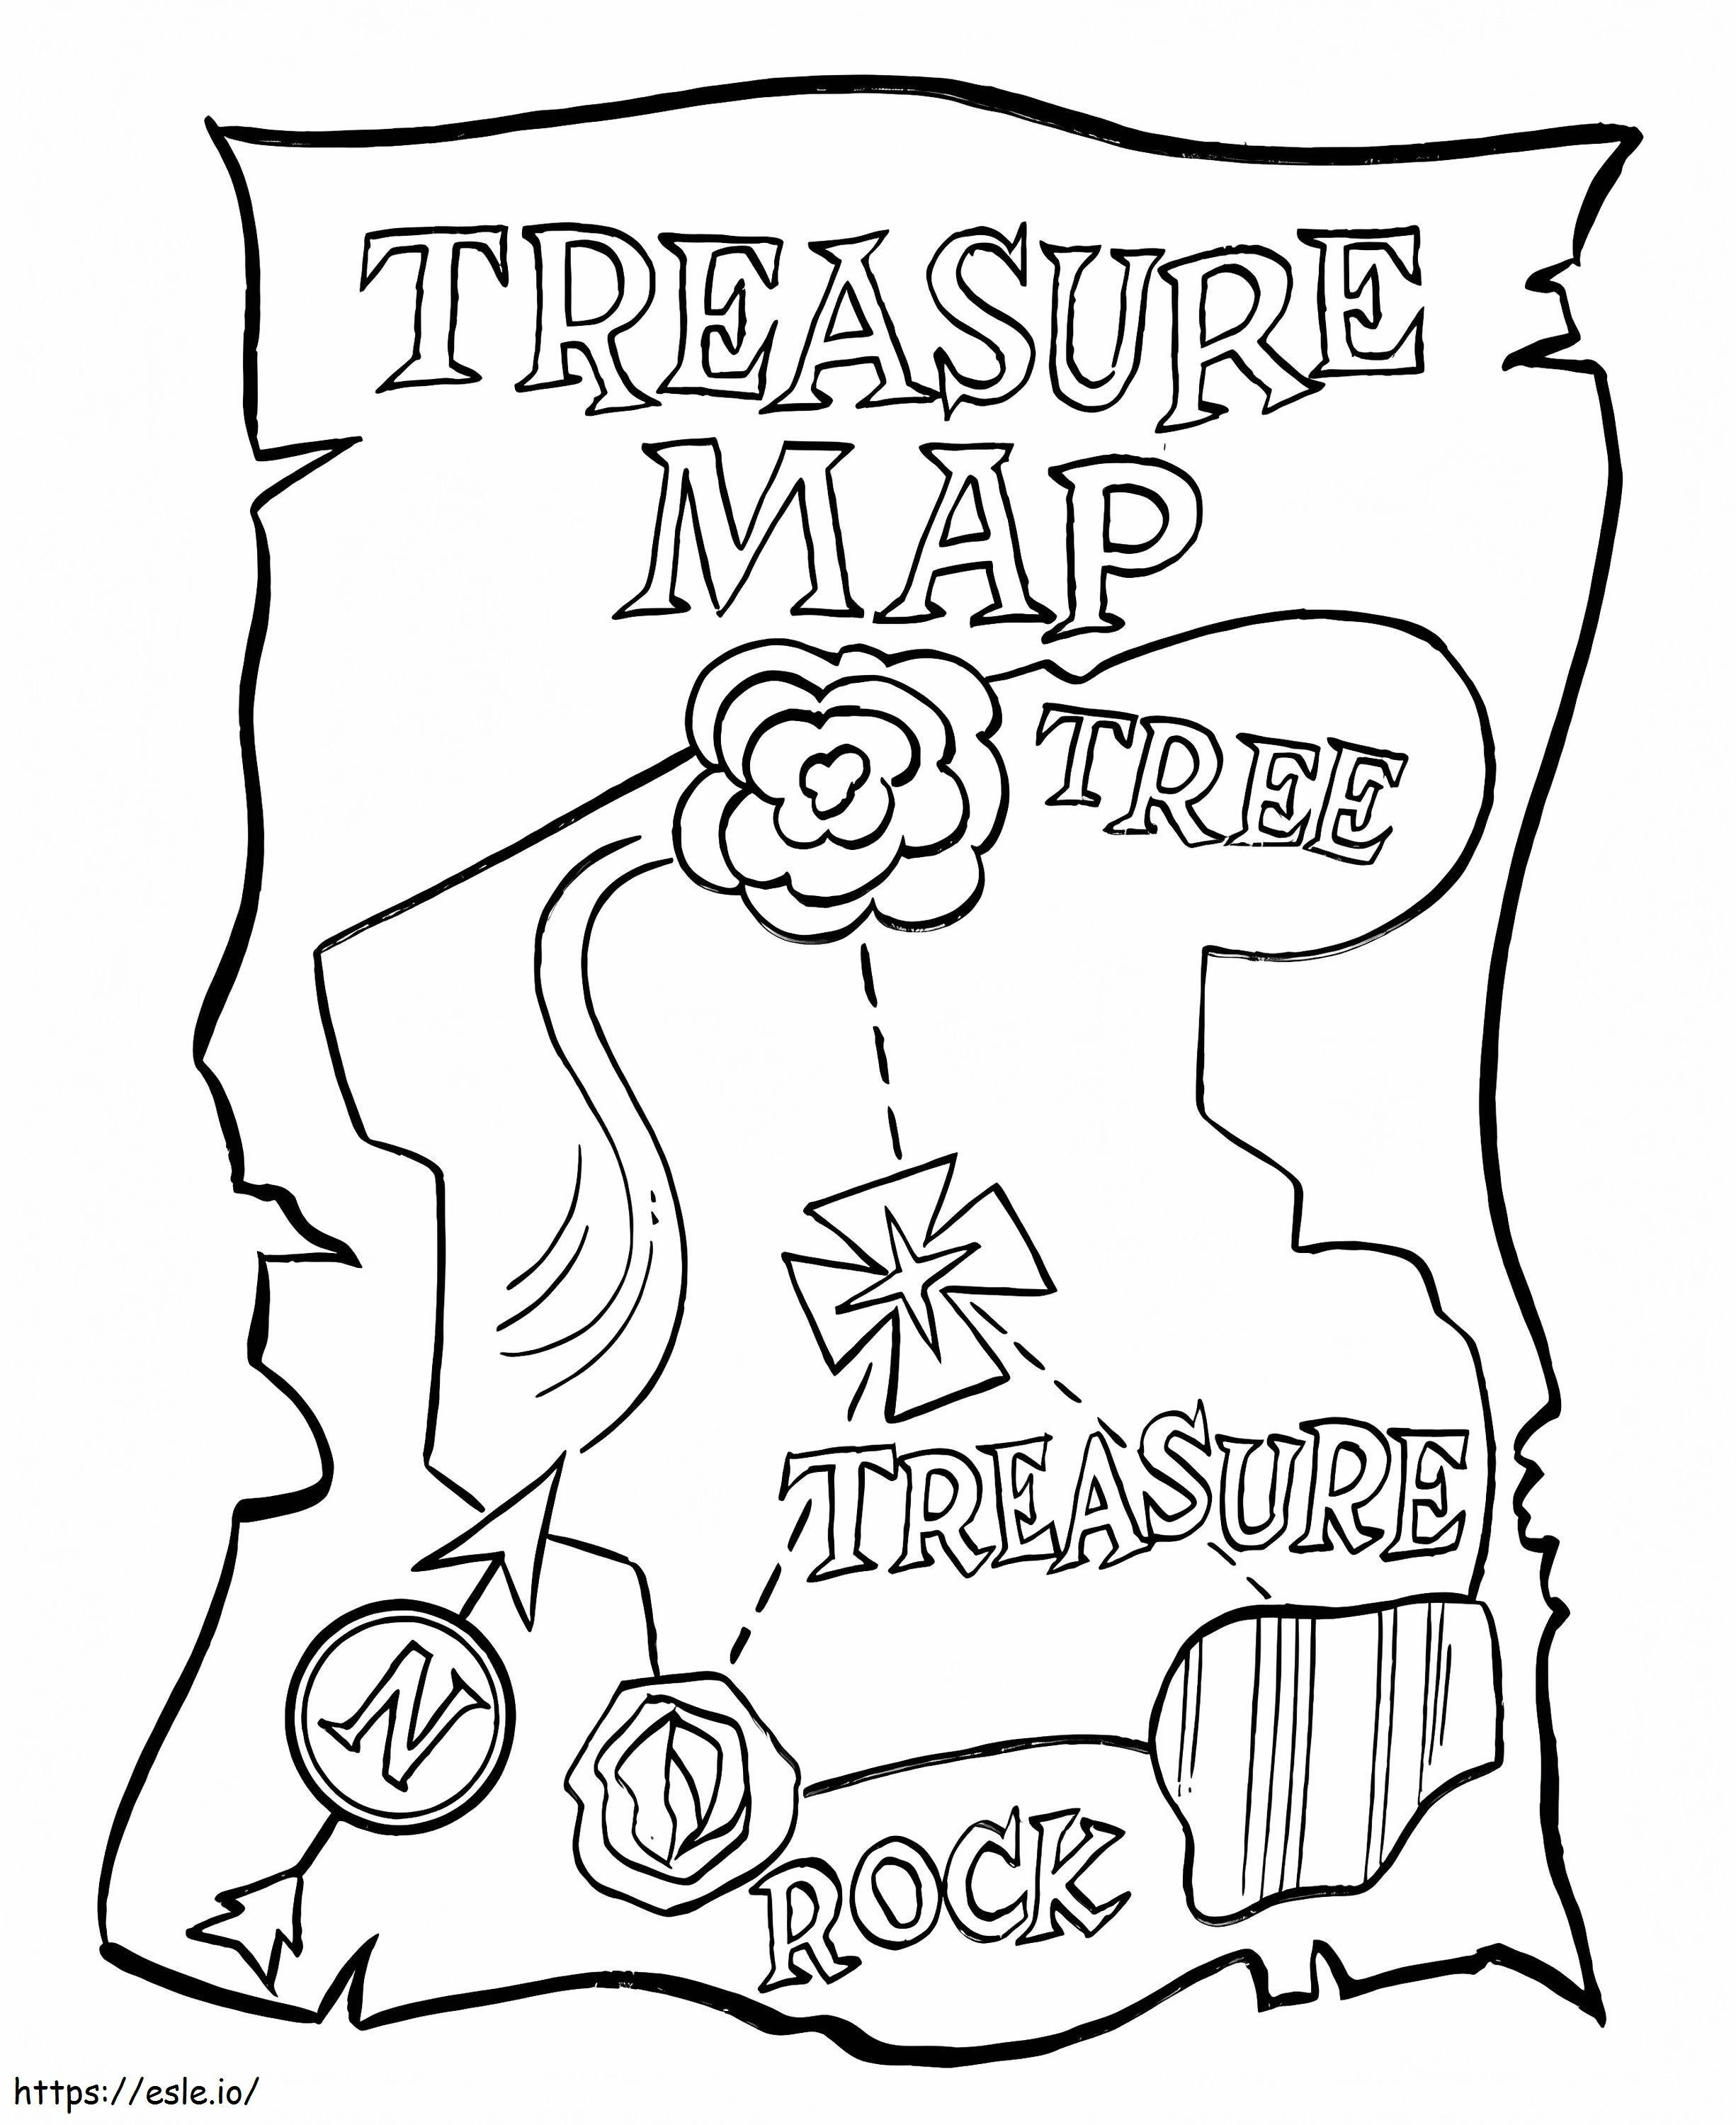 A Treasure Map coloring page